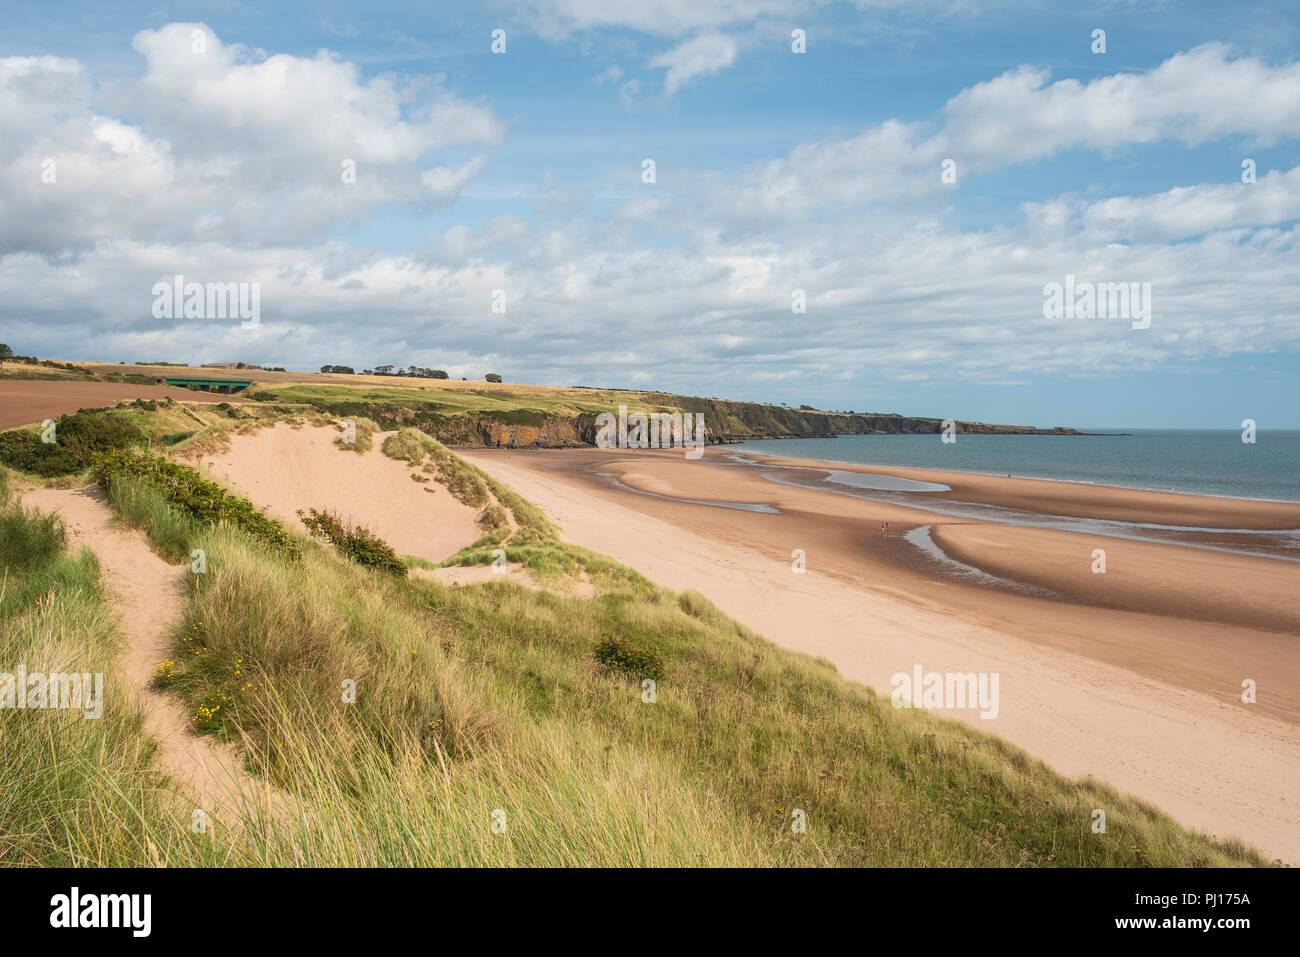 Lunan Bay beach and sand dunes, Angus, Scotland. Stock Photo